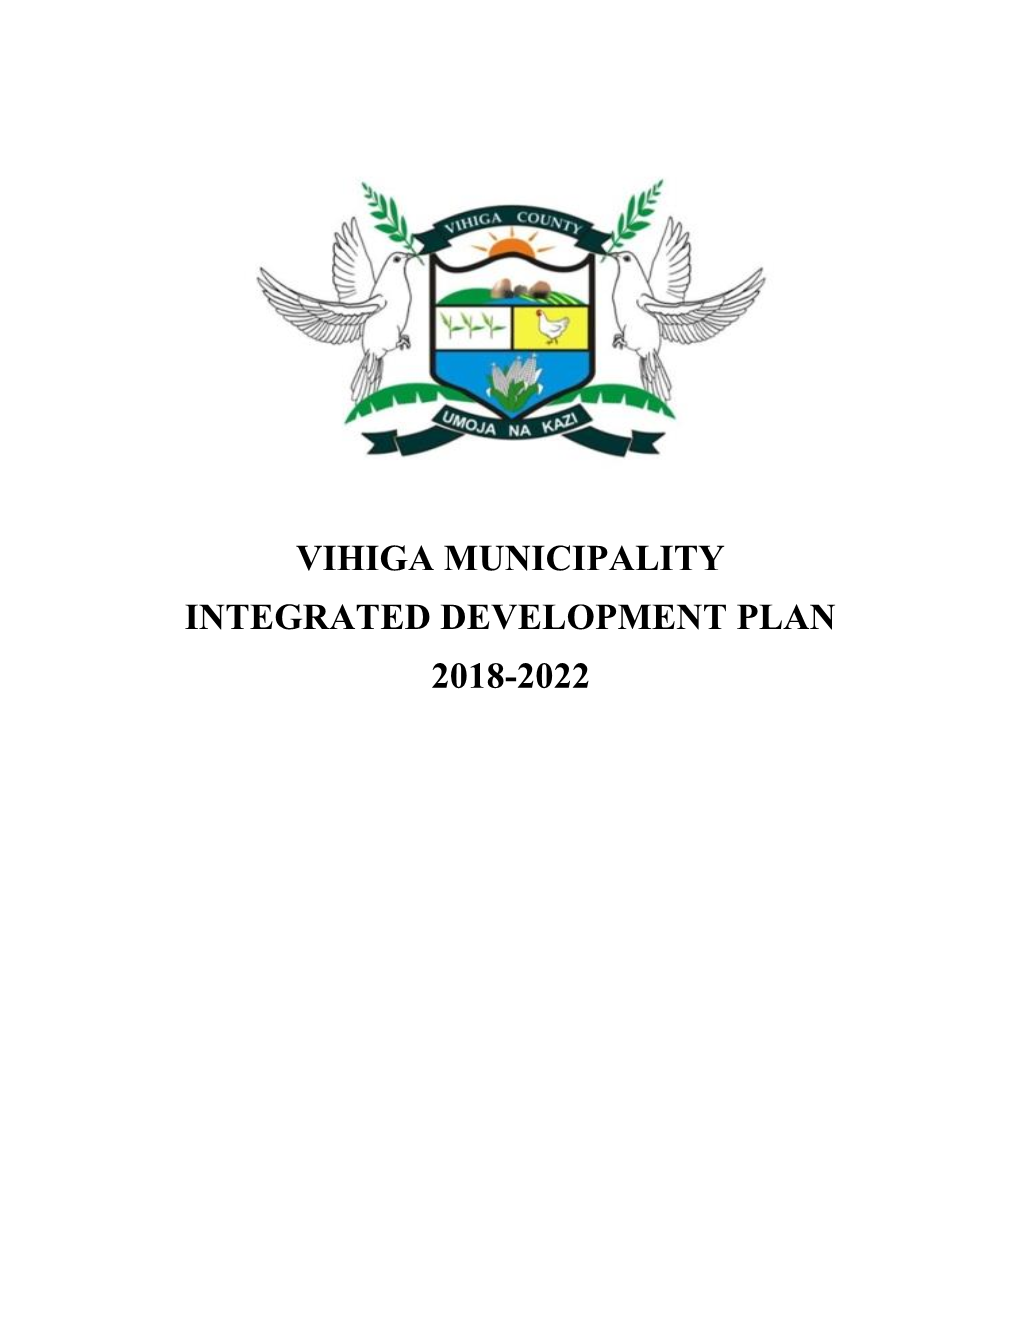 Vihiga Municipality Integrated Development Plan 2018-2022